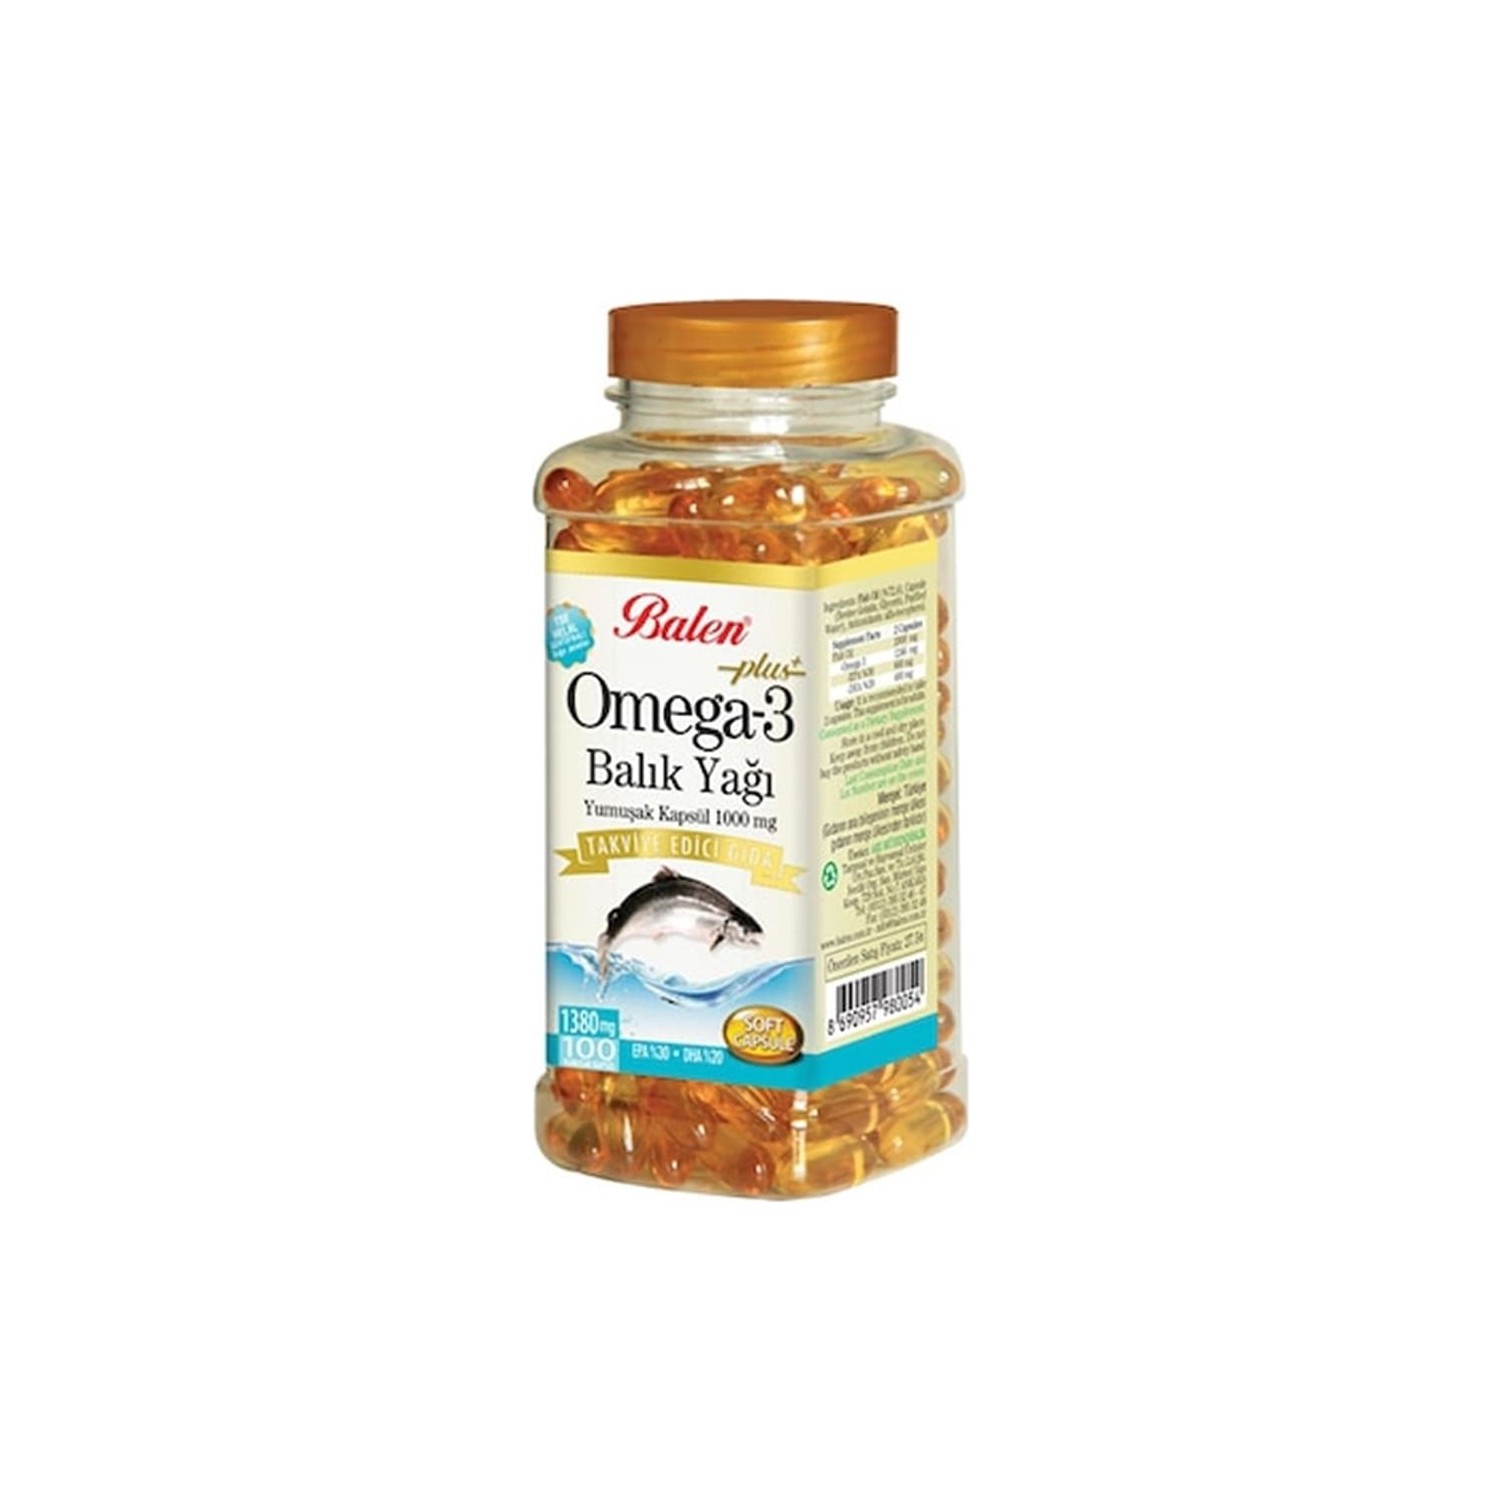 Рыбий жир Balen Omega 3, 100 капсул, 1380 мг норвежский рыбий жир balen omega 3 триглицерид 1380 мг 2 упаковки по 100 капсул